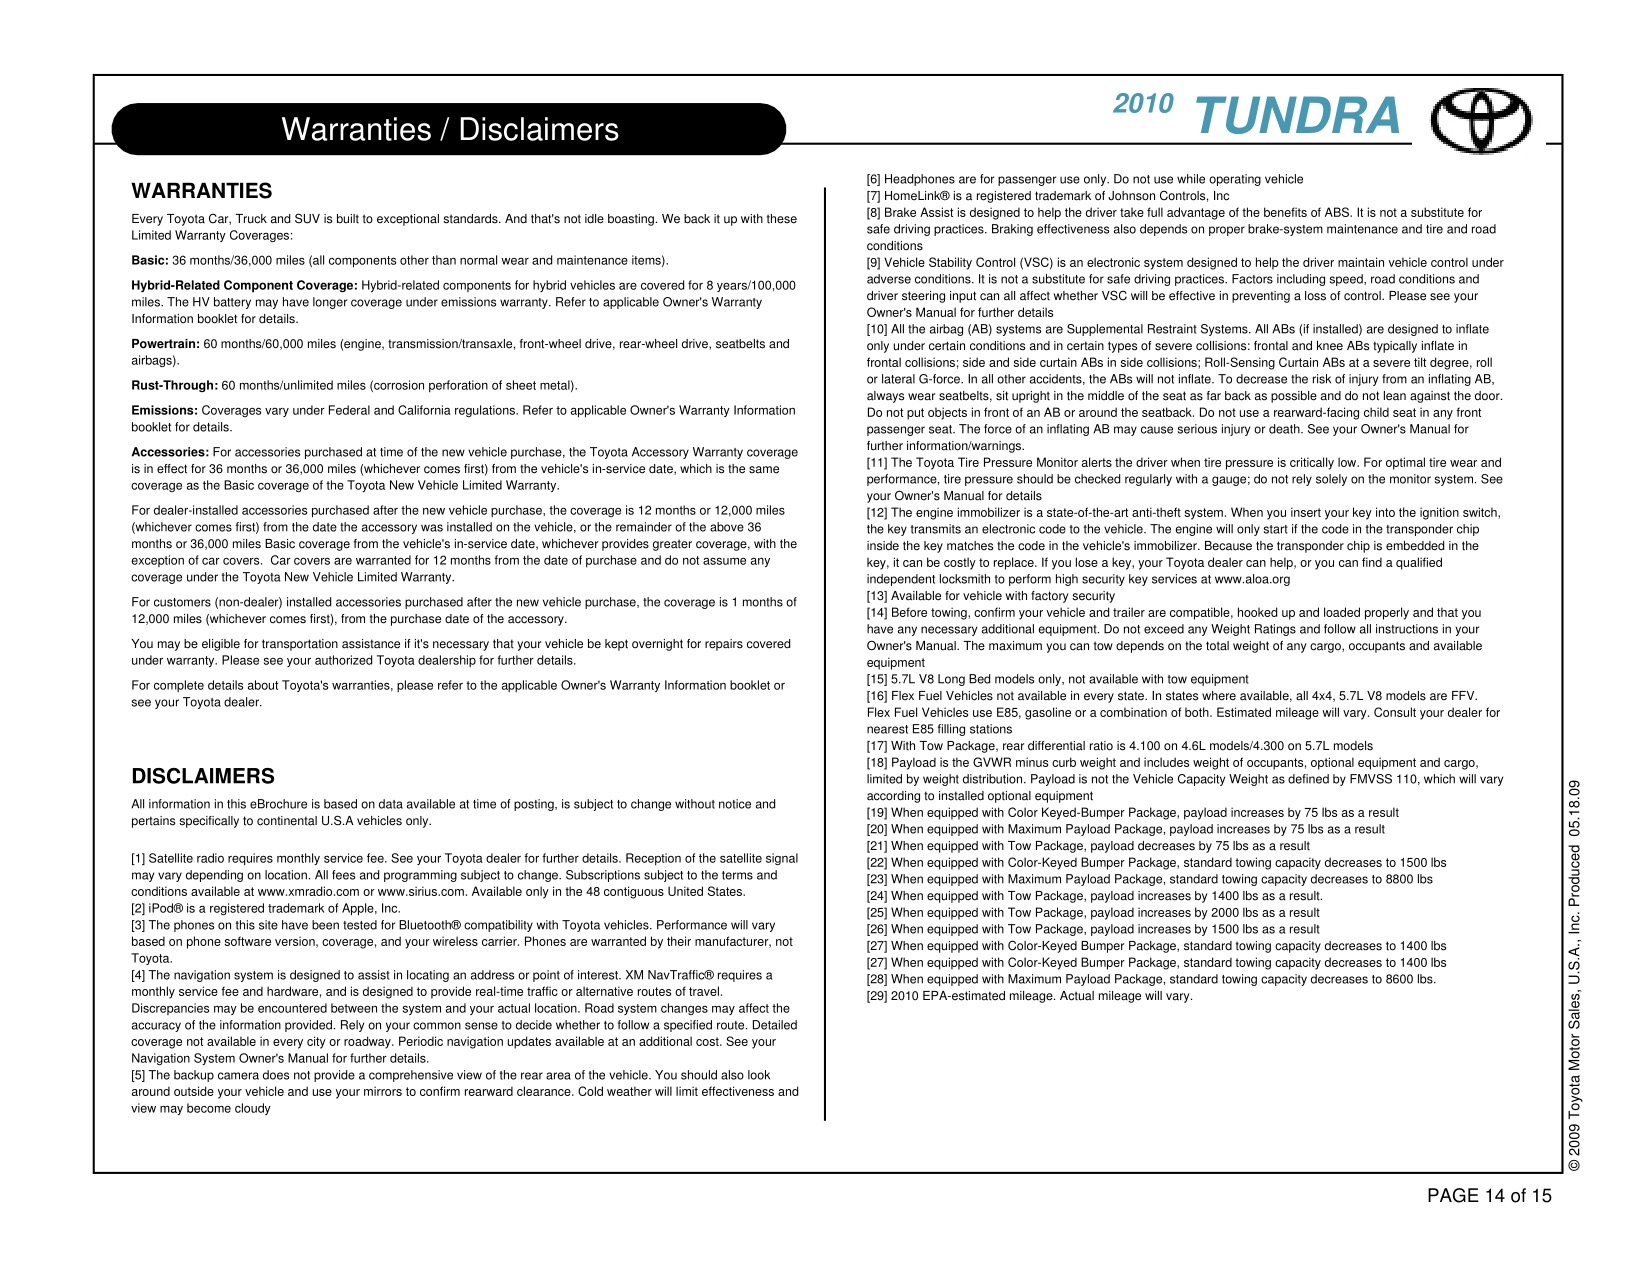 2010 Toyota Tundra CM 4x4 Brochure Page 4